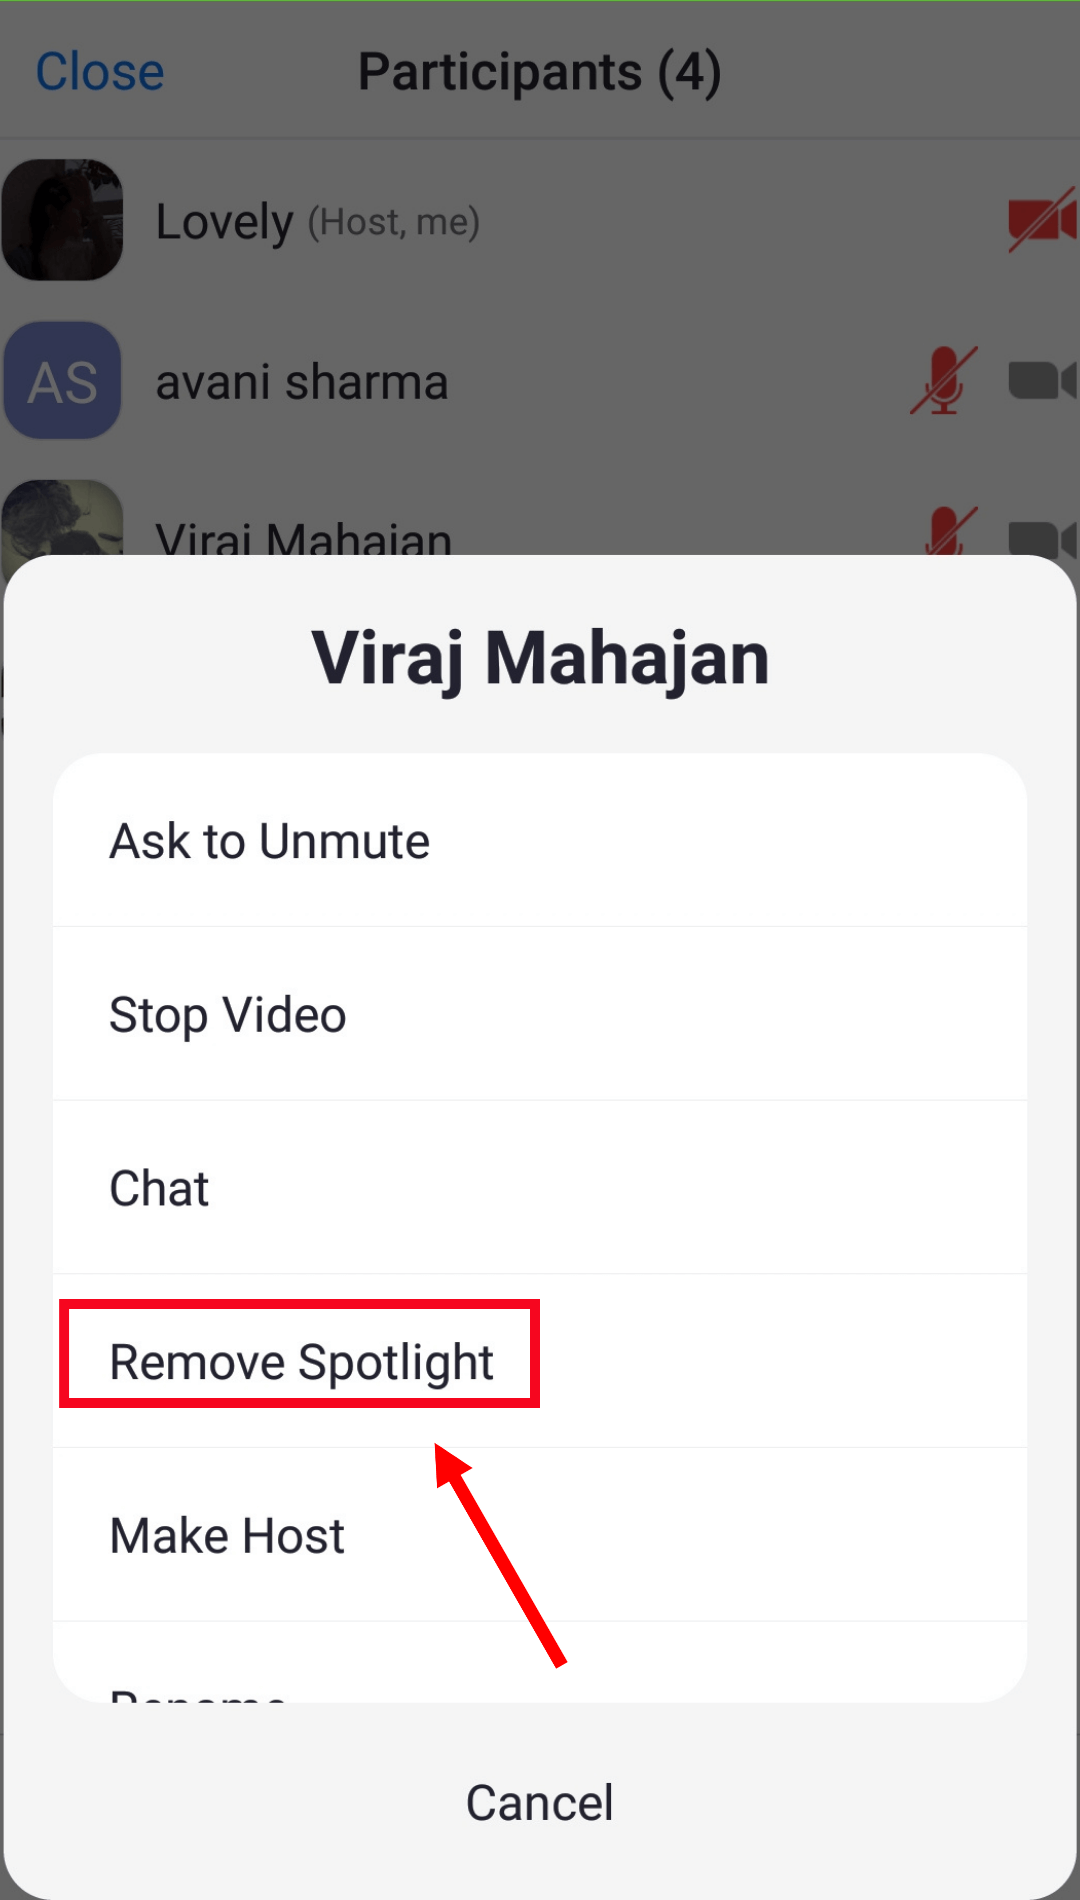 select remove spotlight to remove participant from spotlight